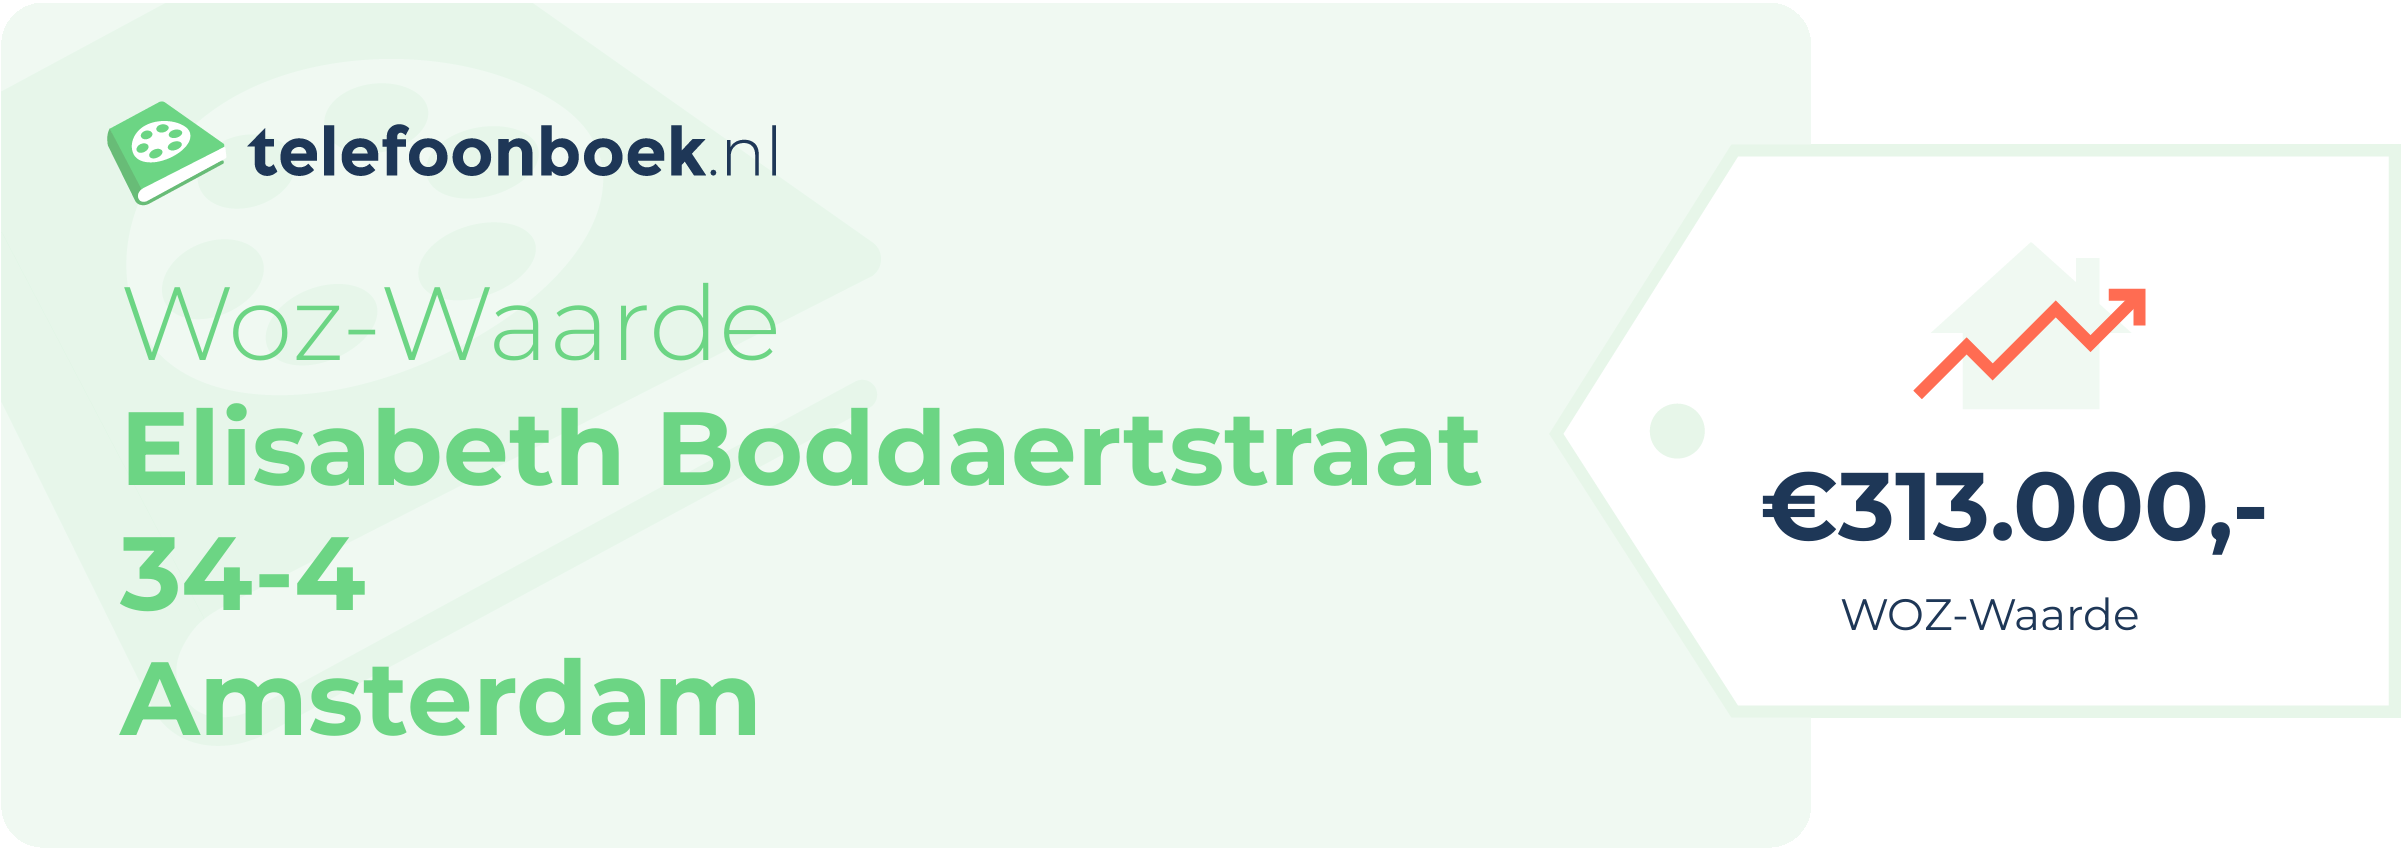 WOZ-waarde Elisabeth Boddaertstraat 34-4 Amsterdam